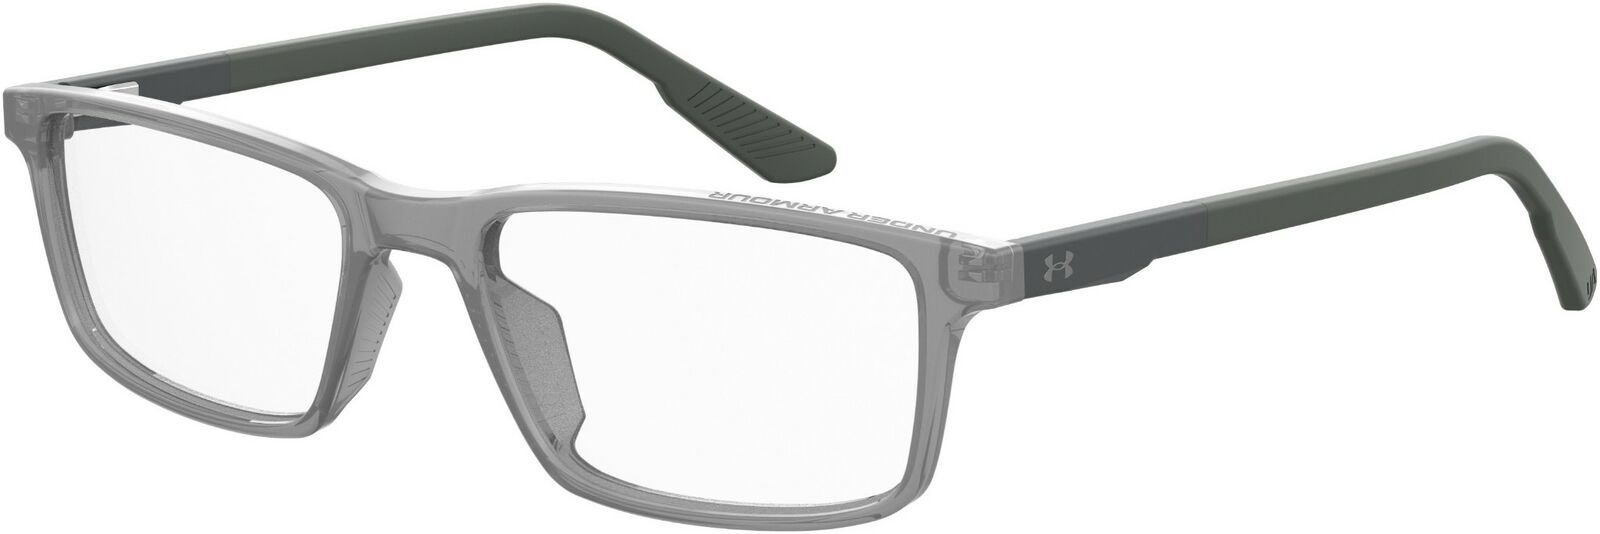 Under Armour Ua 5009 0KB7 Gray Rectangle Men's Eyeglasses